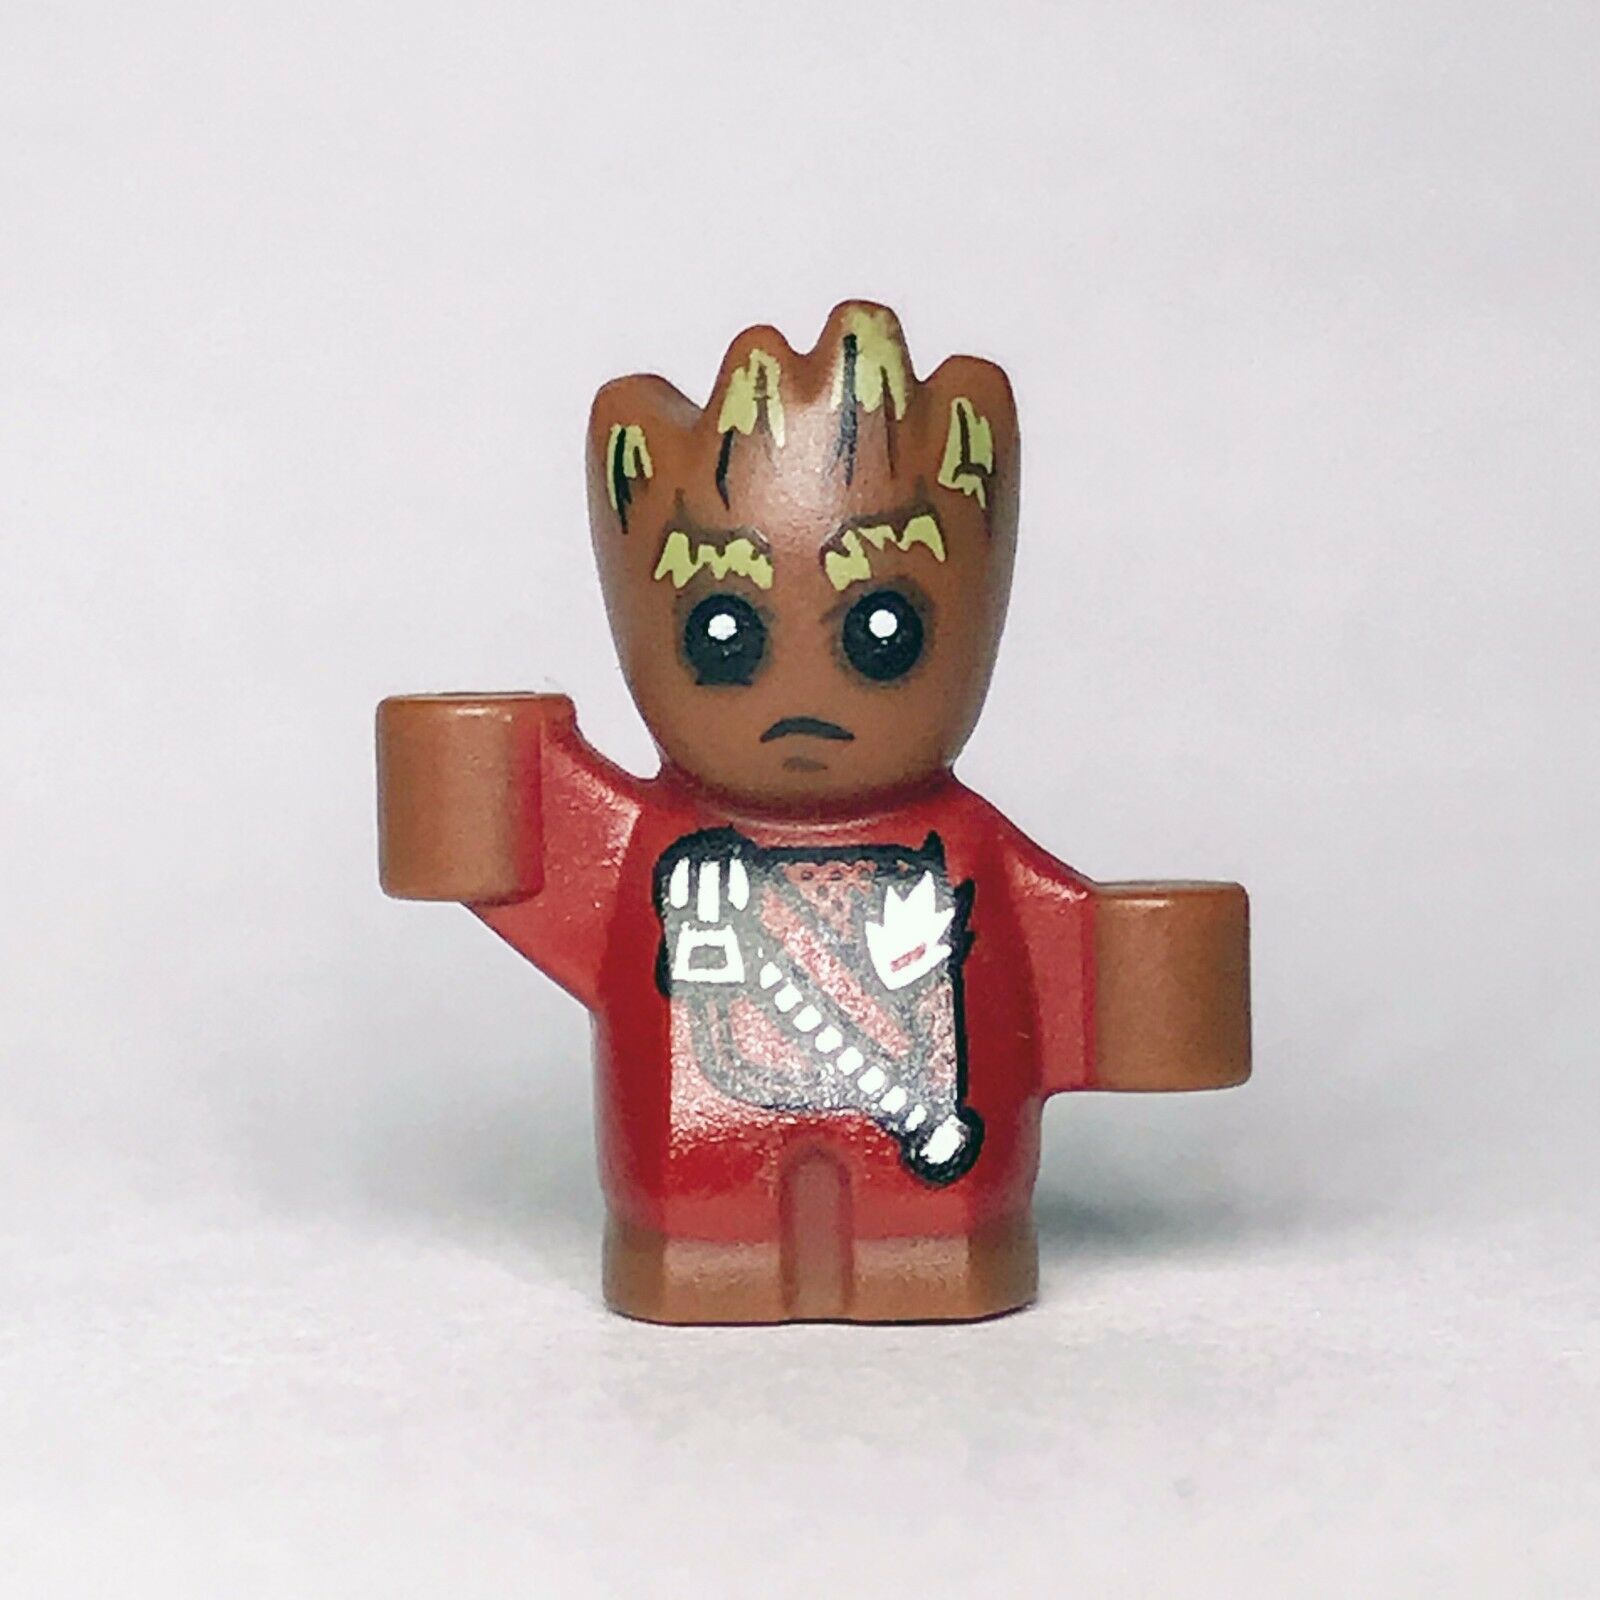 New Marvel Super Heroes LEGO Baby Groot Guardian of the Galaxy Minifigure 76080 - Bricks & Figures